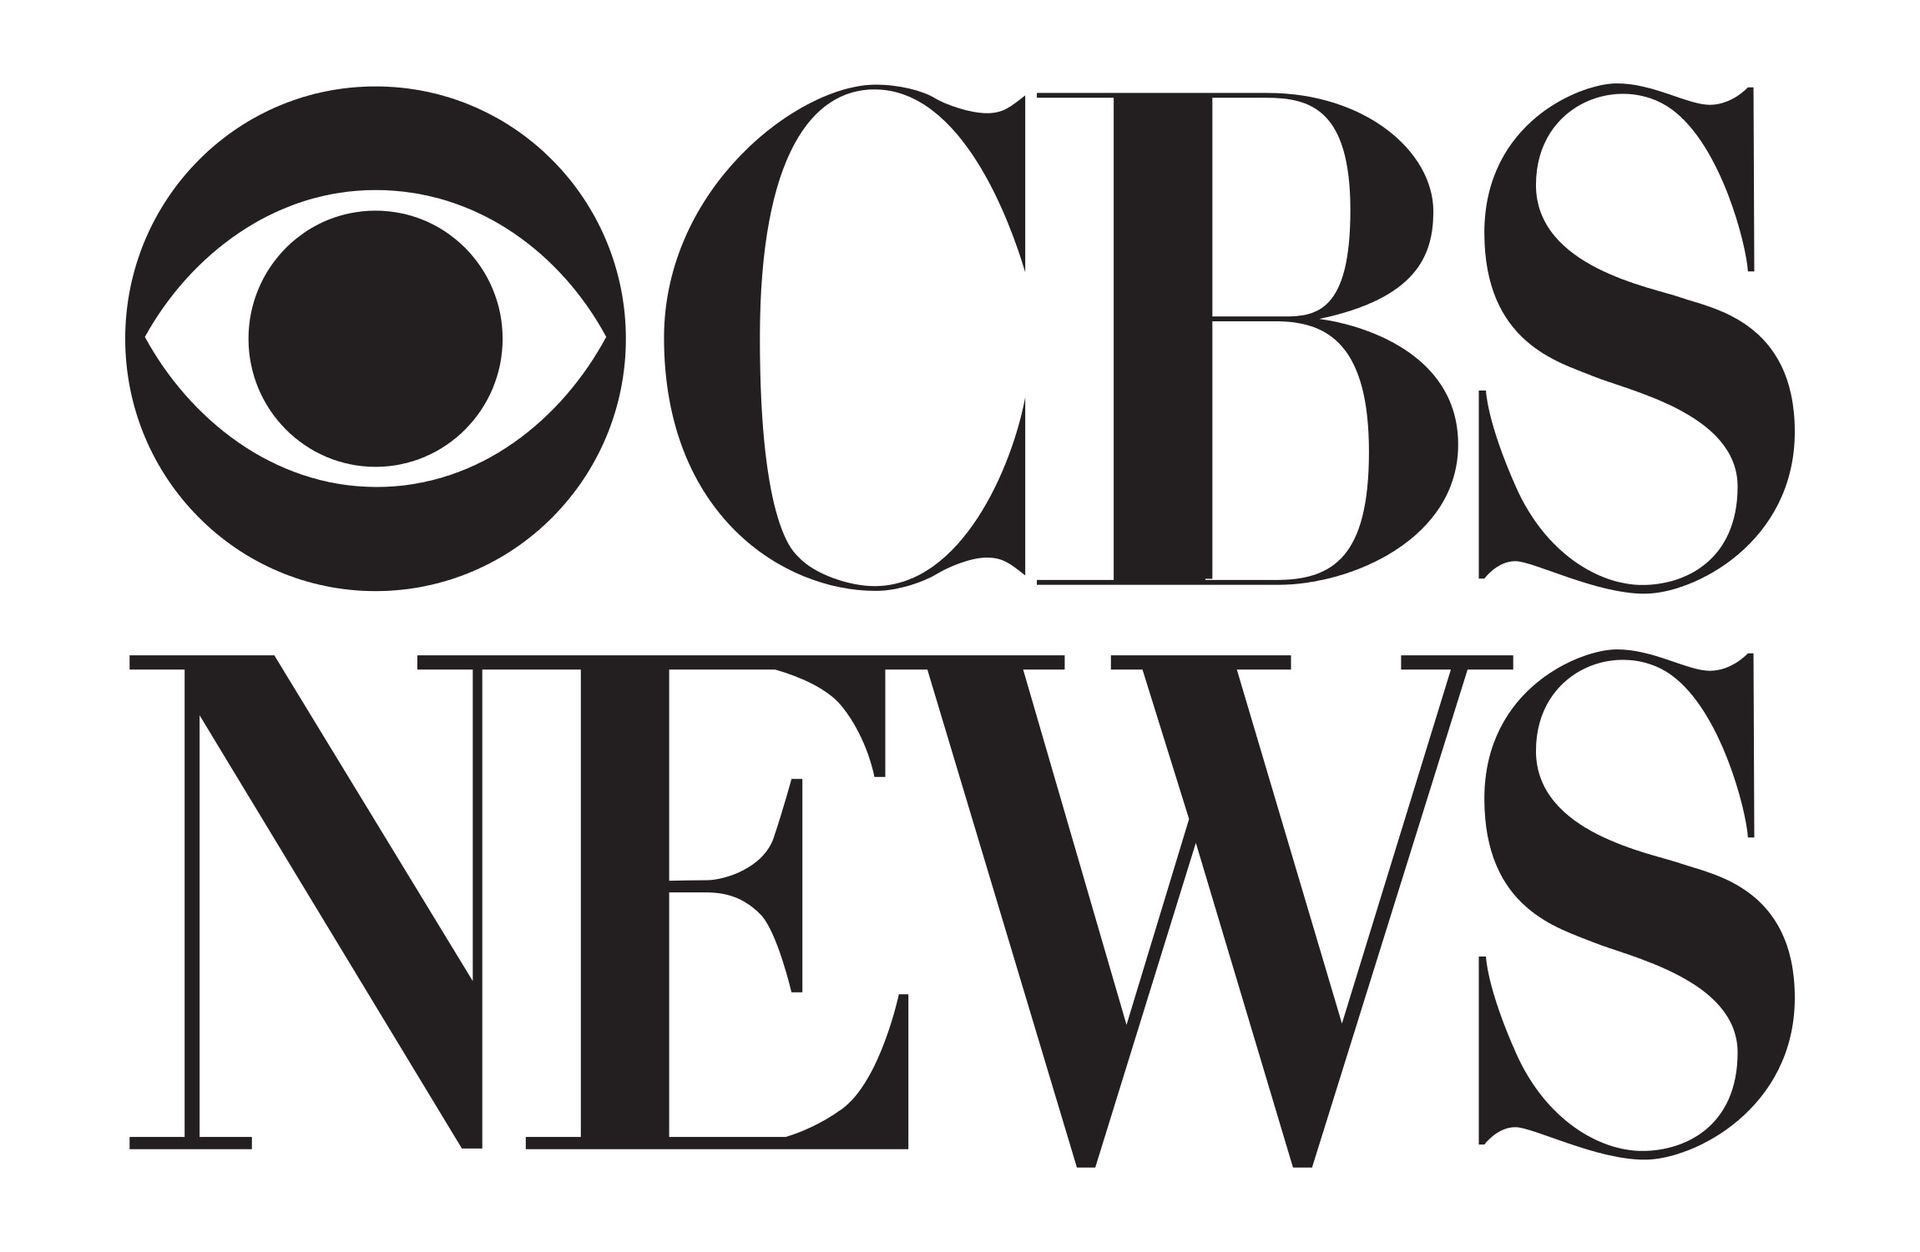 A black and white logo for cbs news